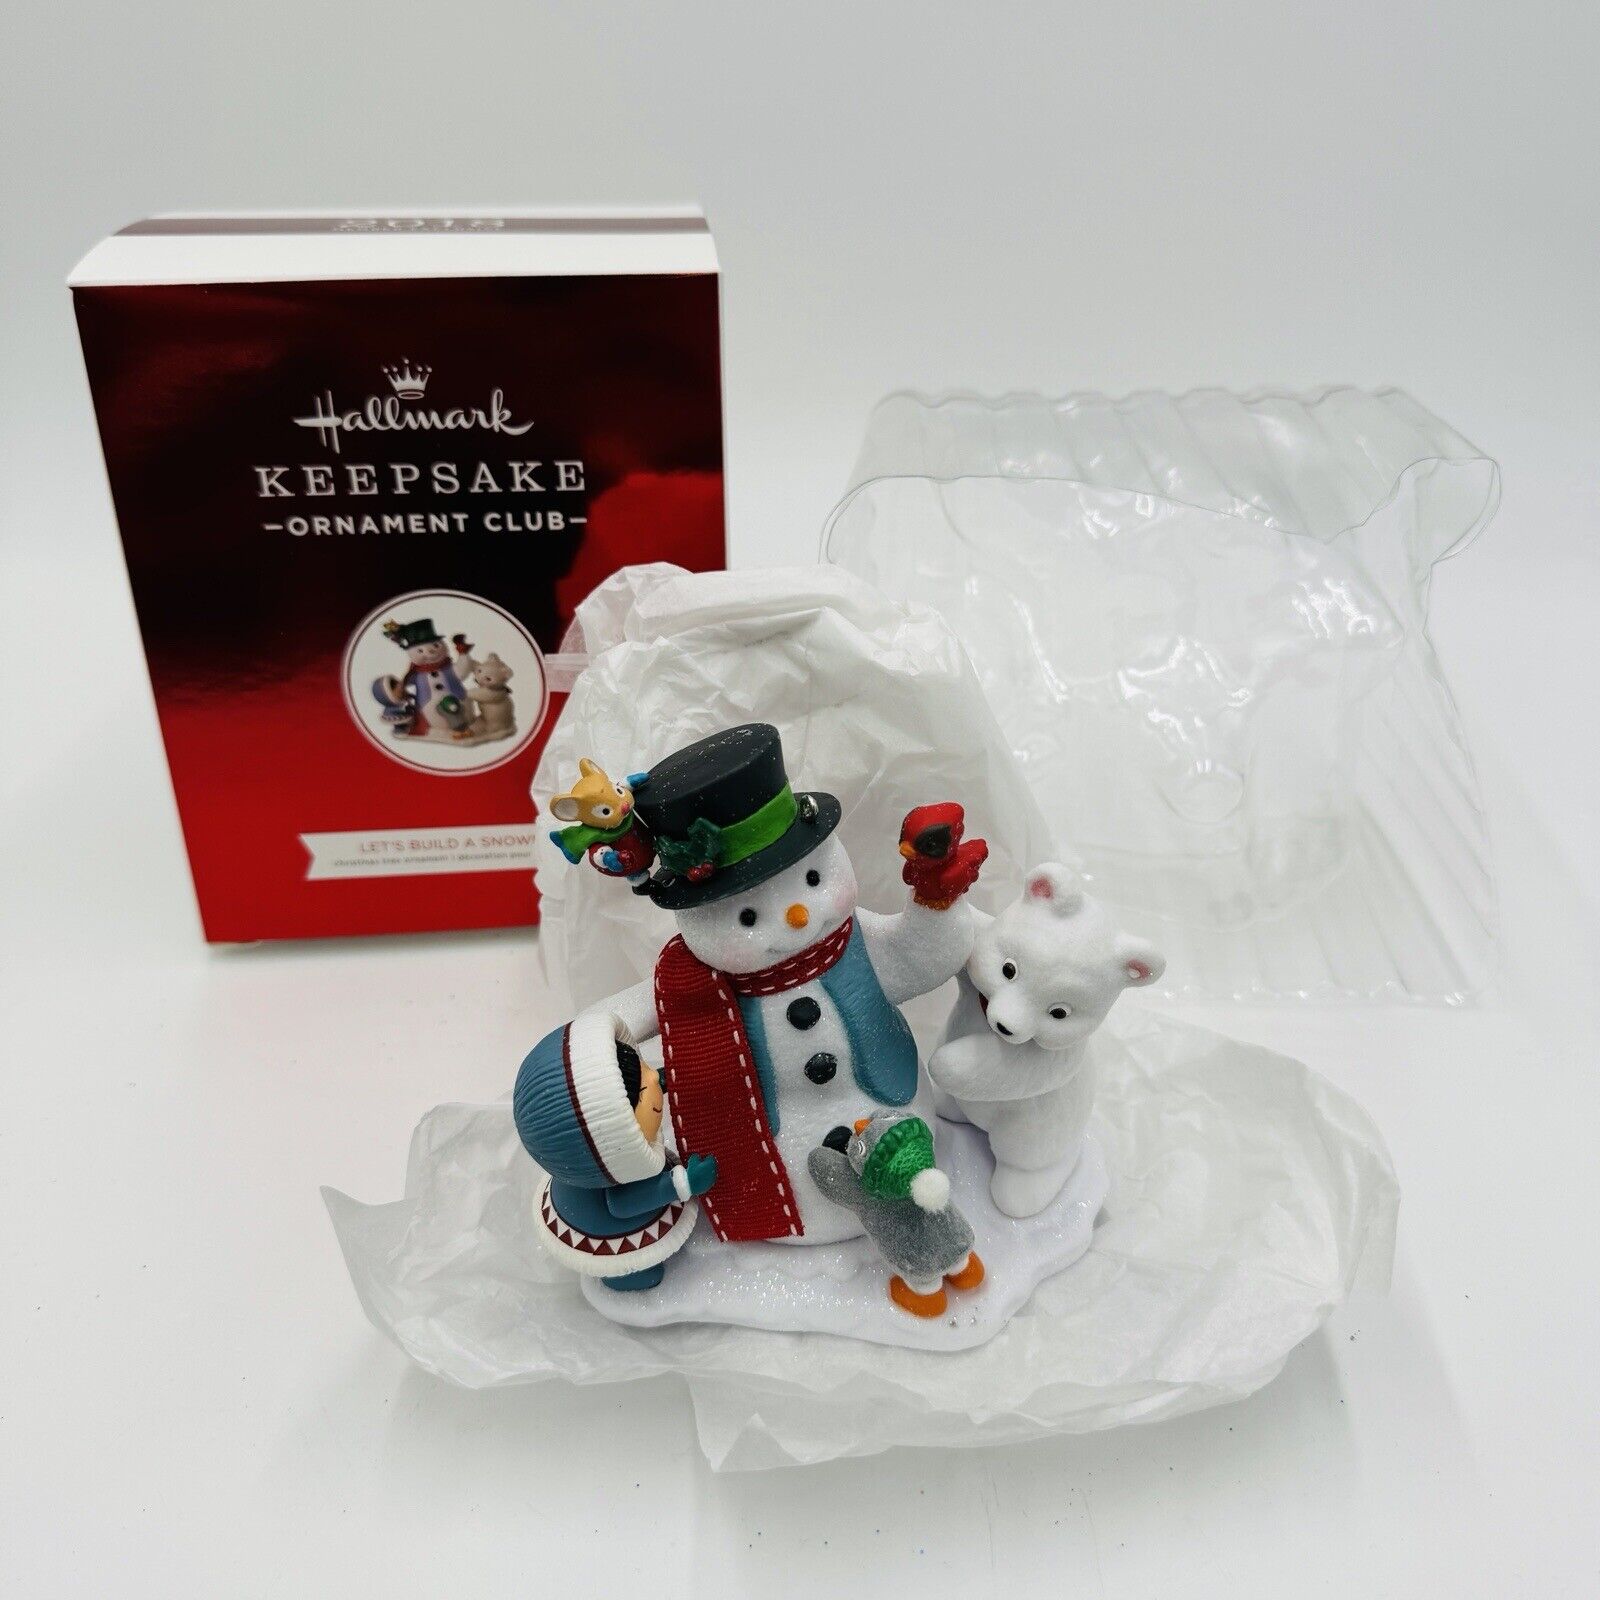 Hallmark Keepsake Ornament Club 2018 Let's Build A Snowman Member Ornament Boxed